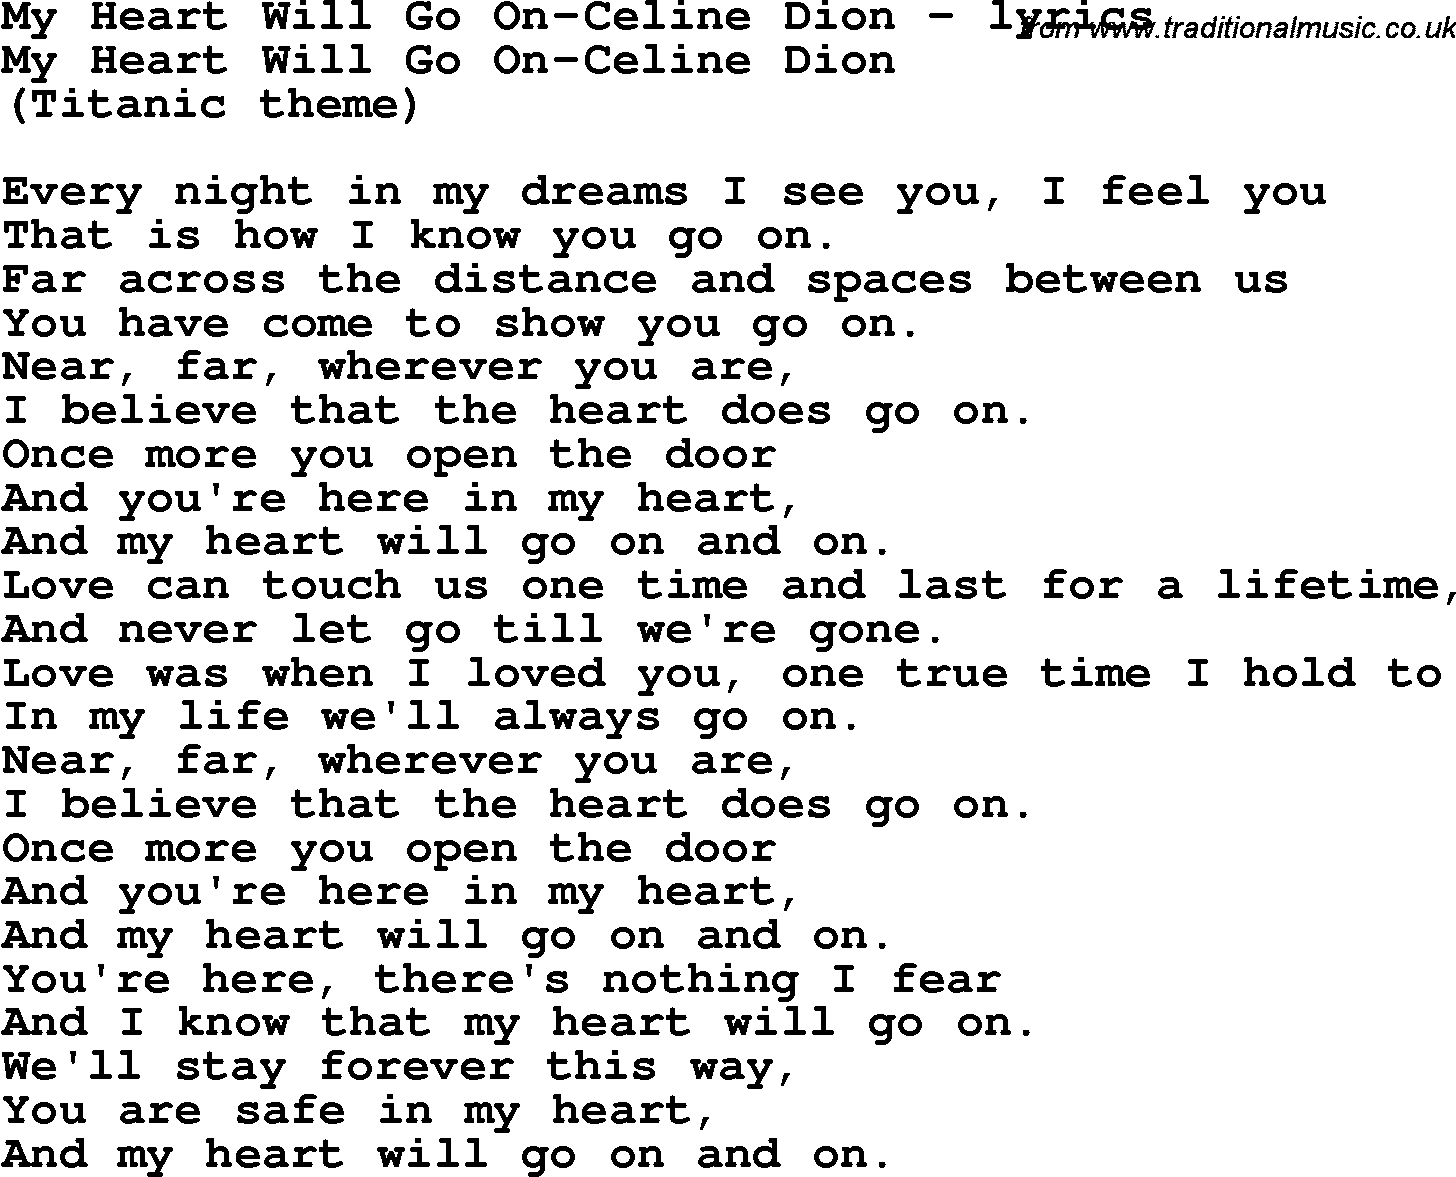 Love Song Lyrics for: My Heart Will Go On-Celine Dion